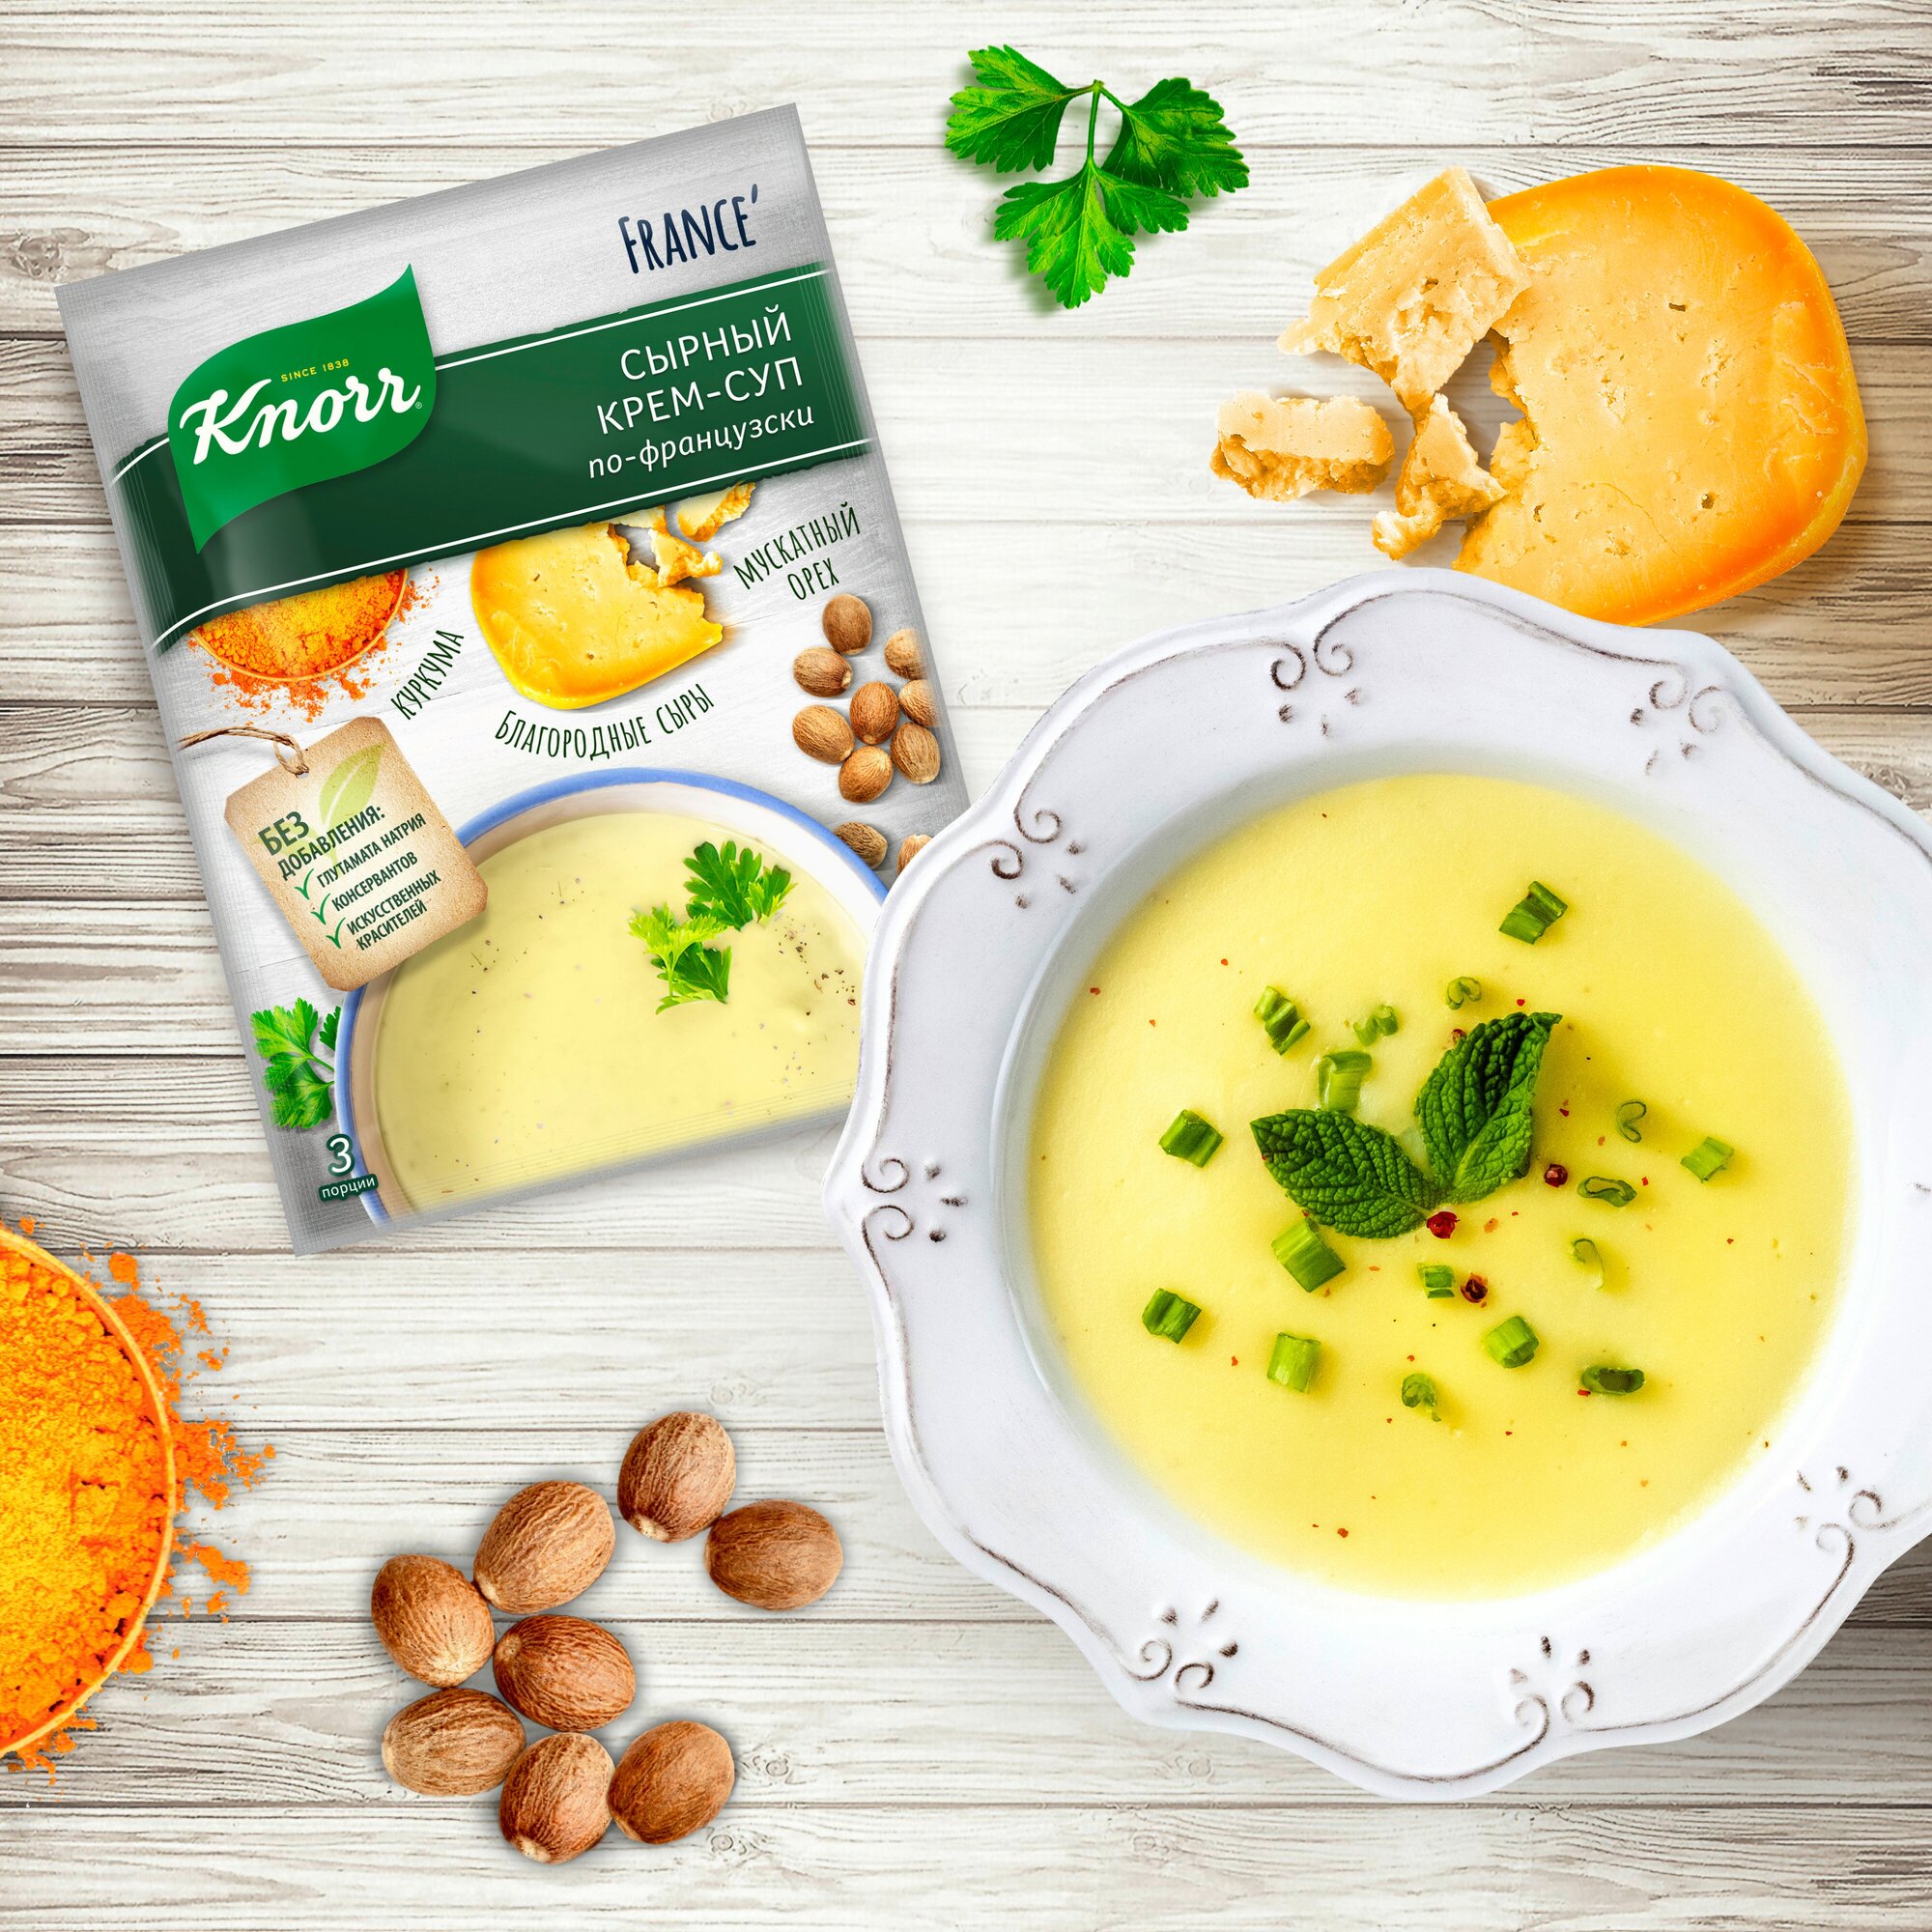 Крем-суп Knorr "Сырный", по-французски, 48гр - фото №7